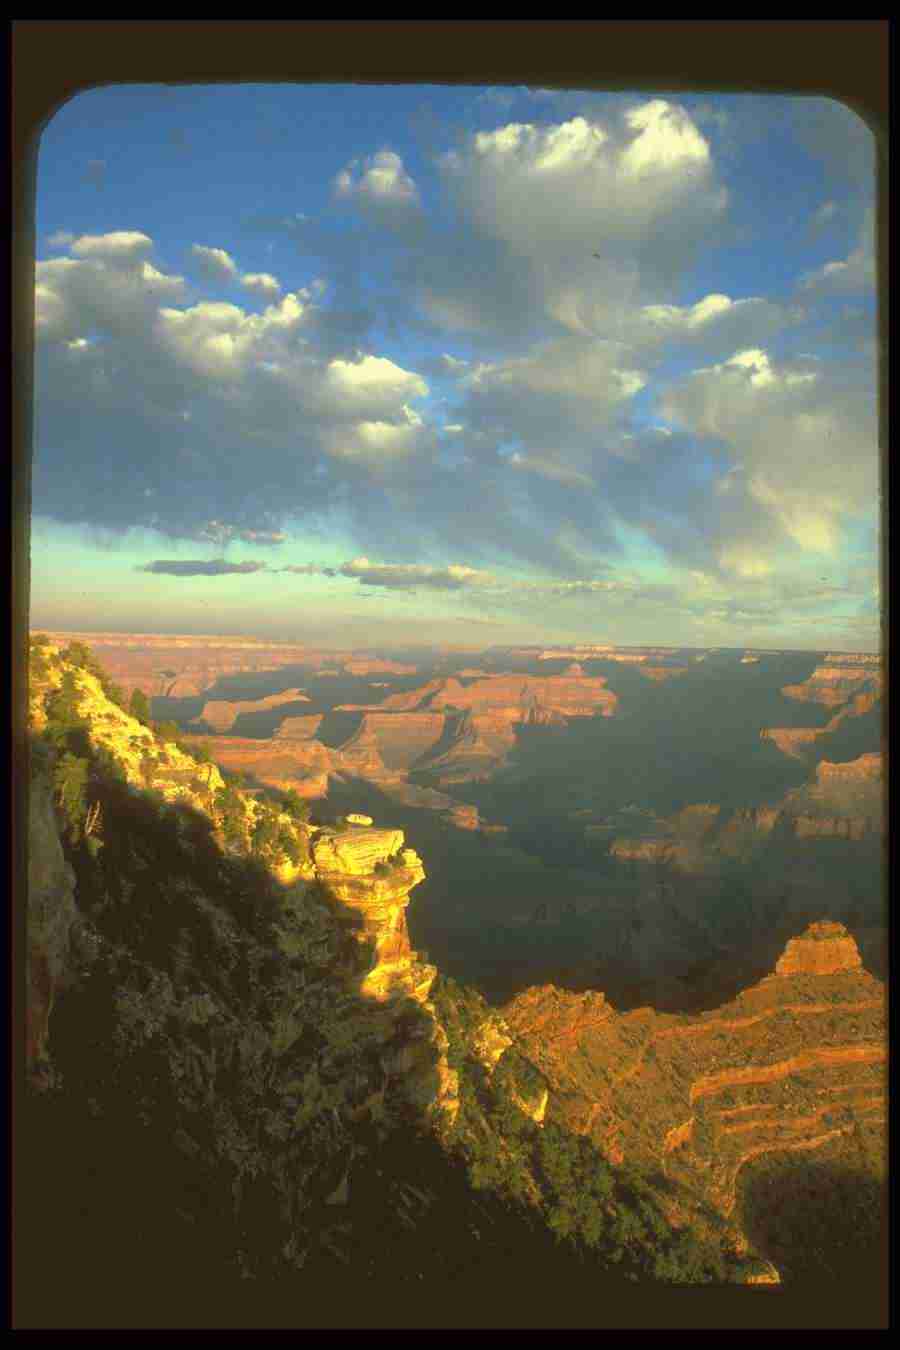 Grand Canyon - Corel Professional Photos ></a>
<script language=JavaScript> 
  var txt = 